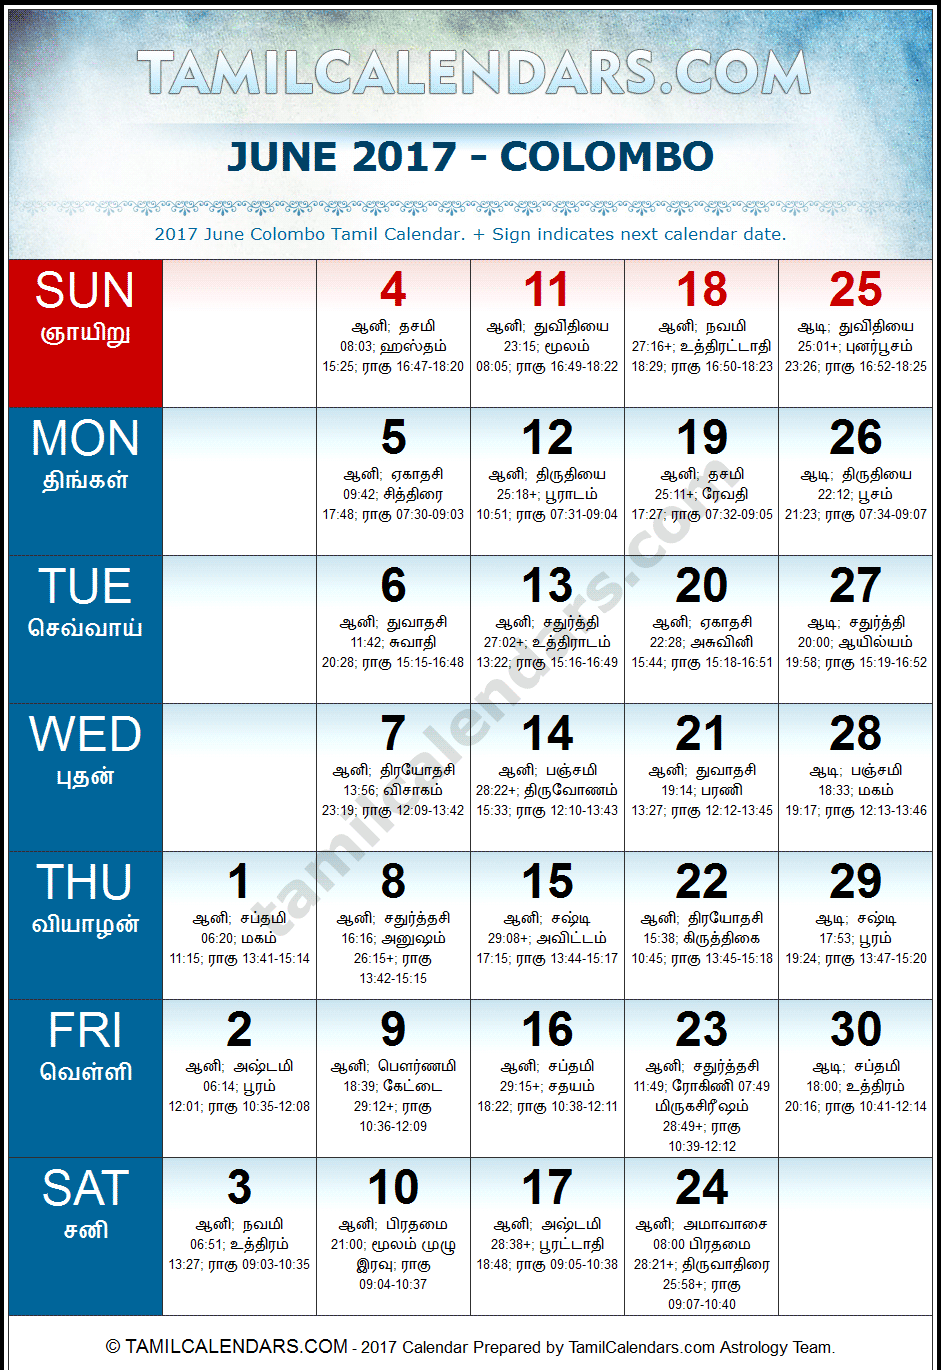 June 2017 Tamil Calendar for Sri Lanka (Colombo)